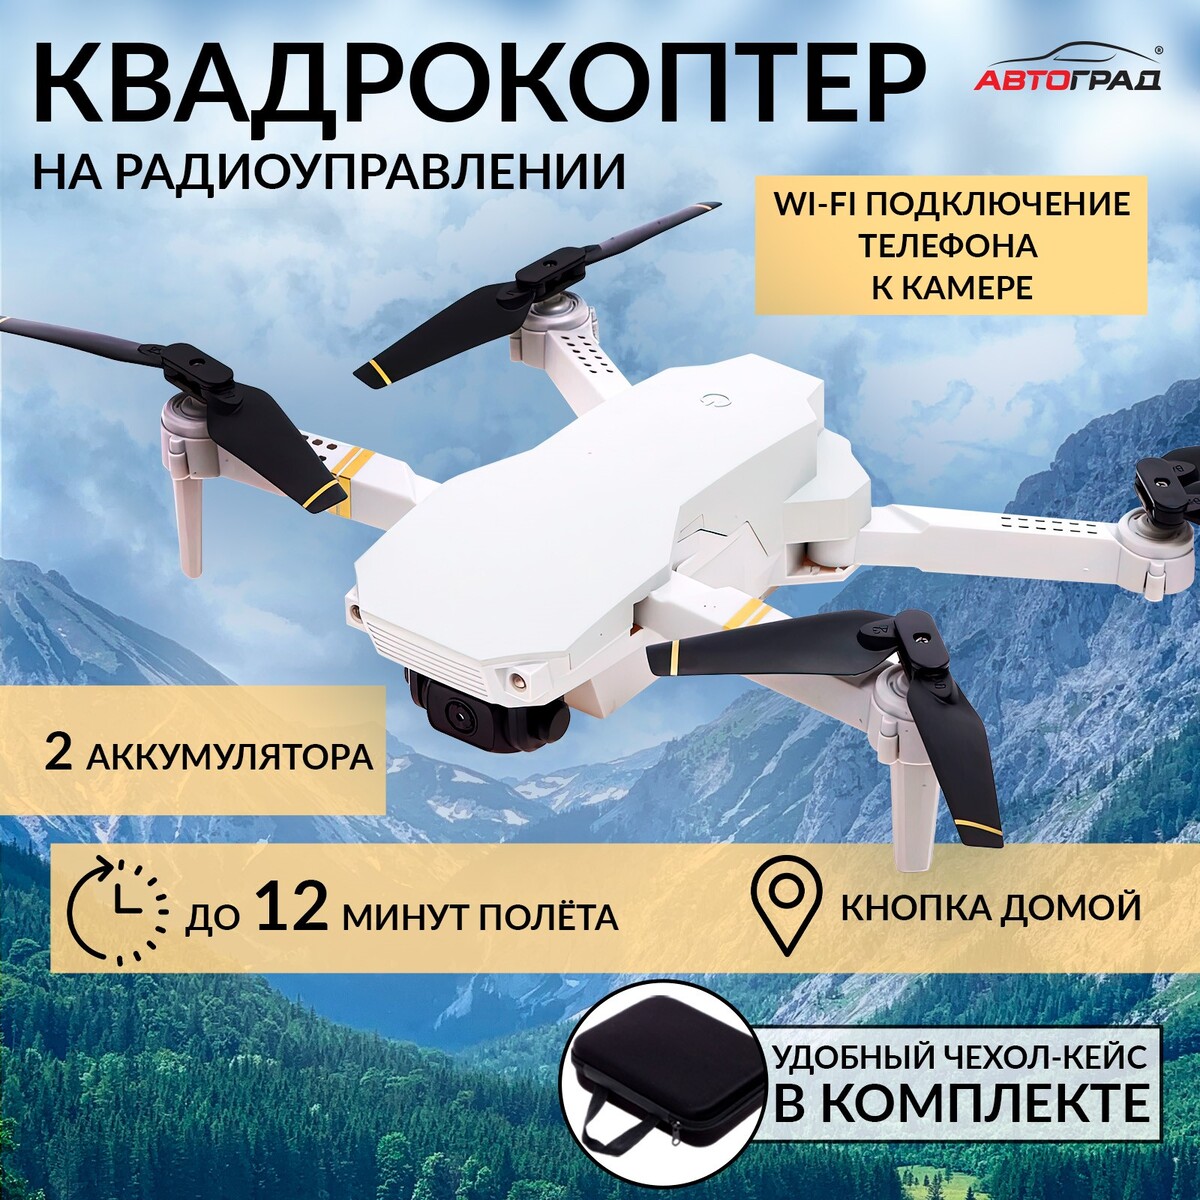 Квадрокоптер на радиоуправлении skydrone, камера 1080p, барометр,wi-fi, 2 аккумулятора, цвет белый Автоград